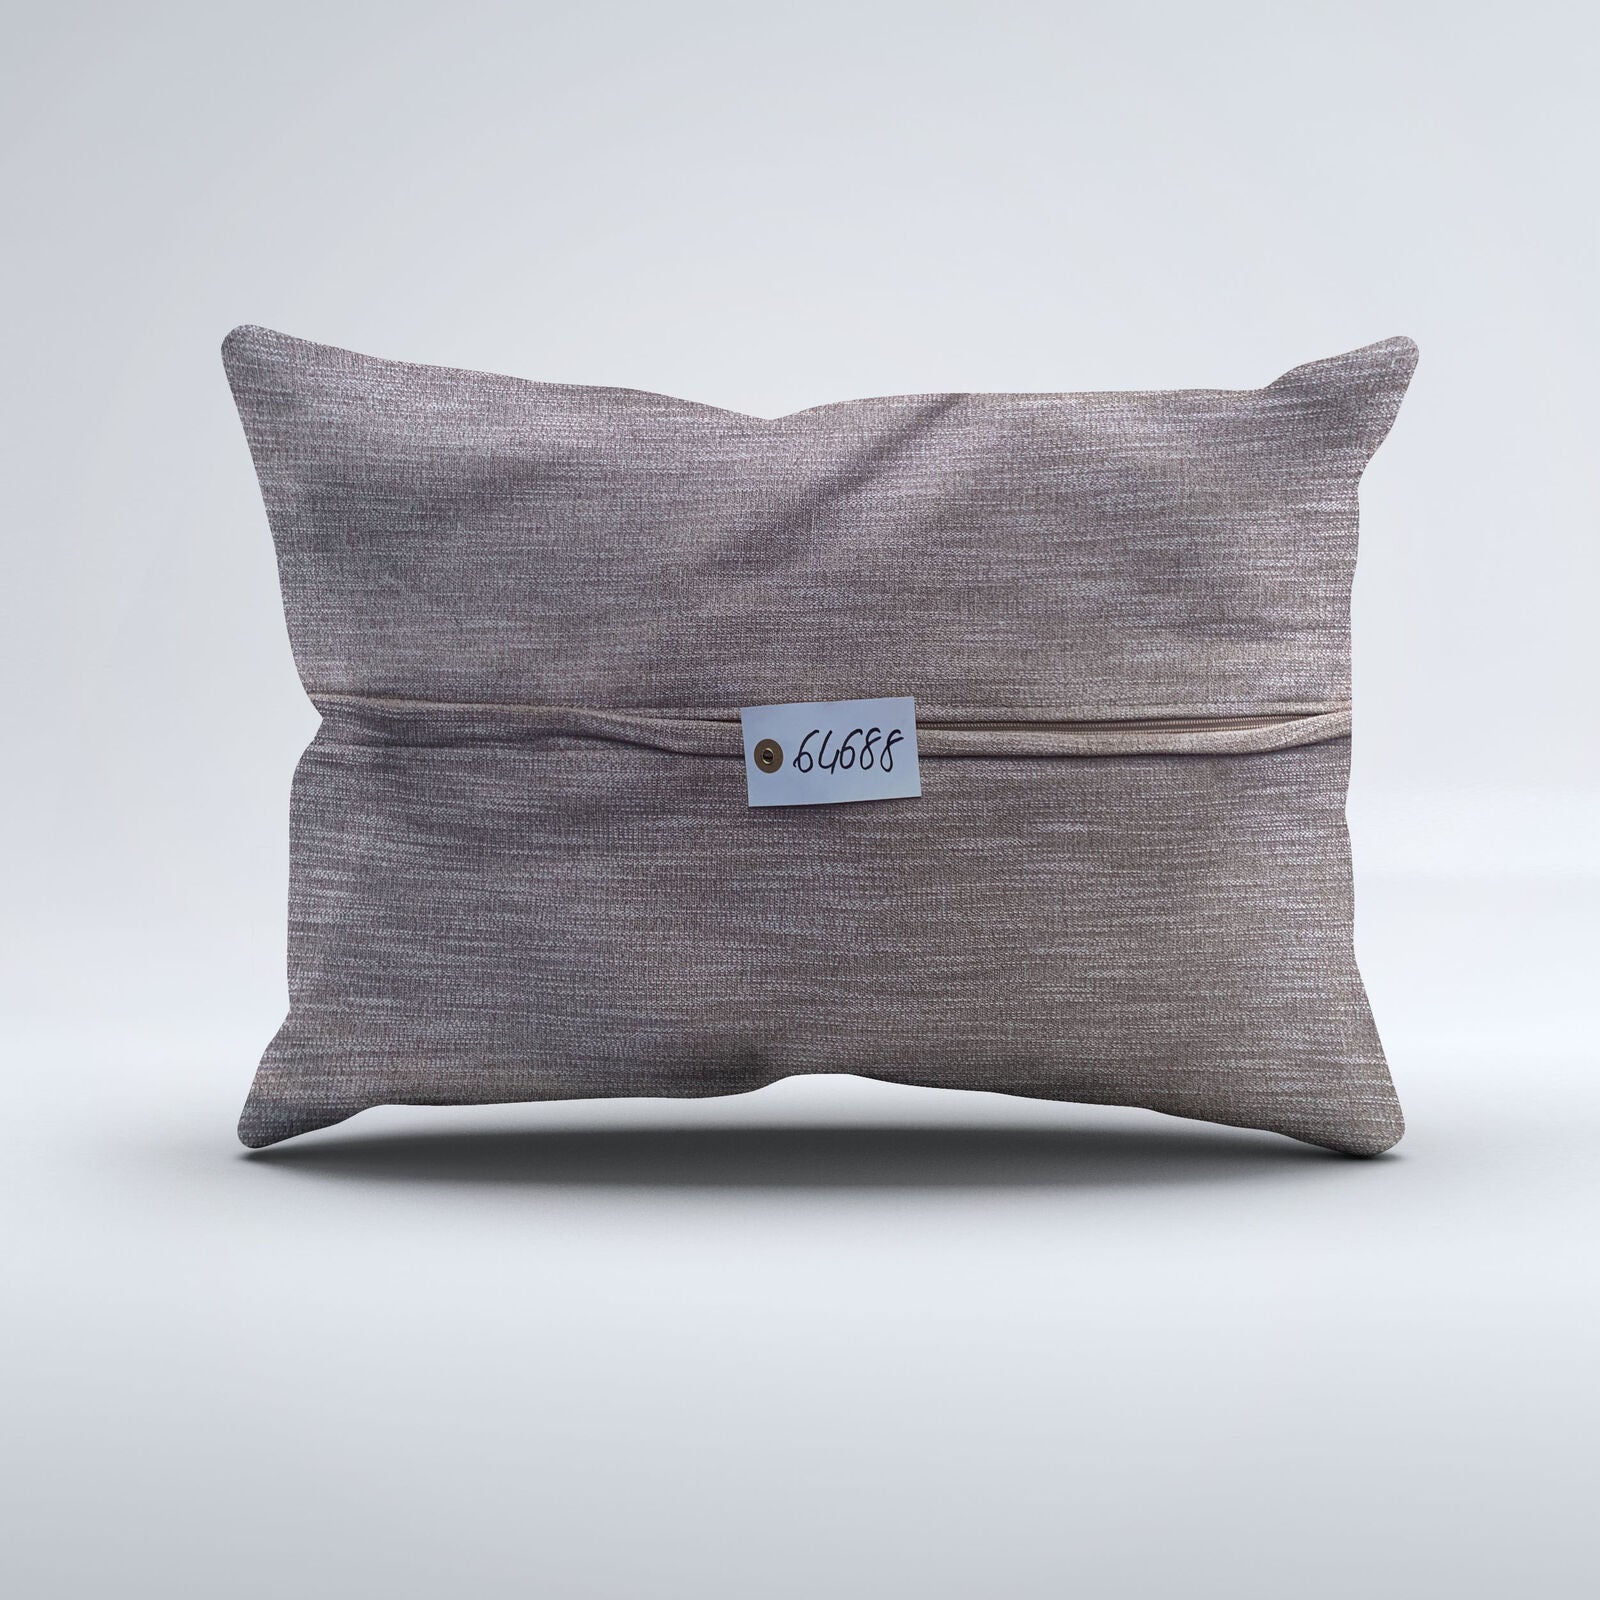 Vintage Turkish Kilim Cushion Cover 60x40 cm Square Wool Kelim Pillowcase 64688